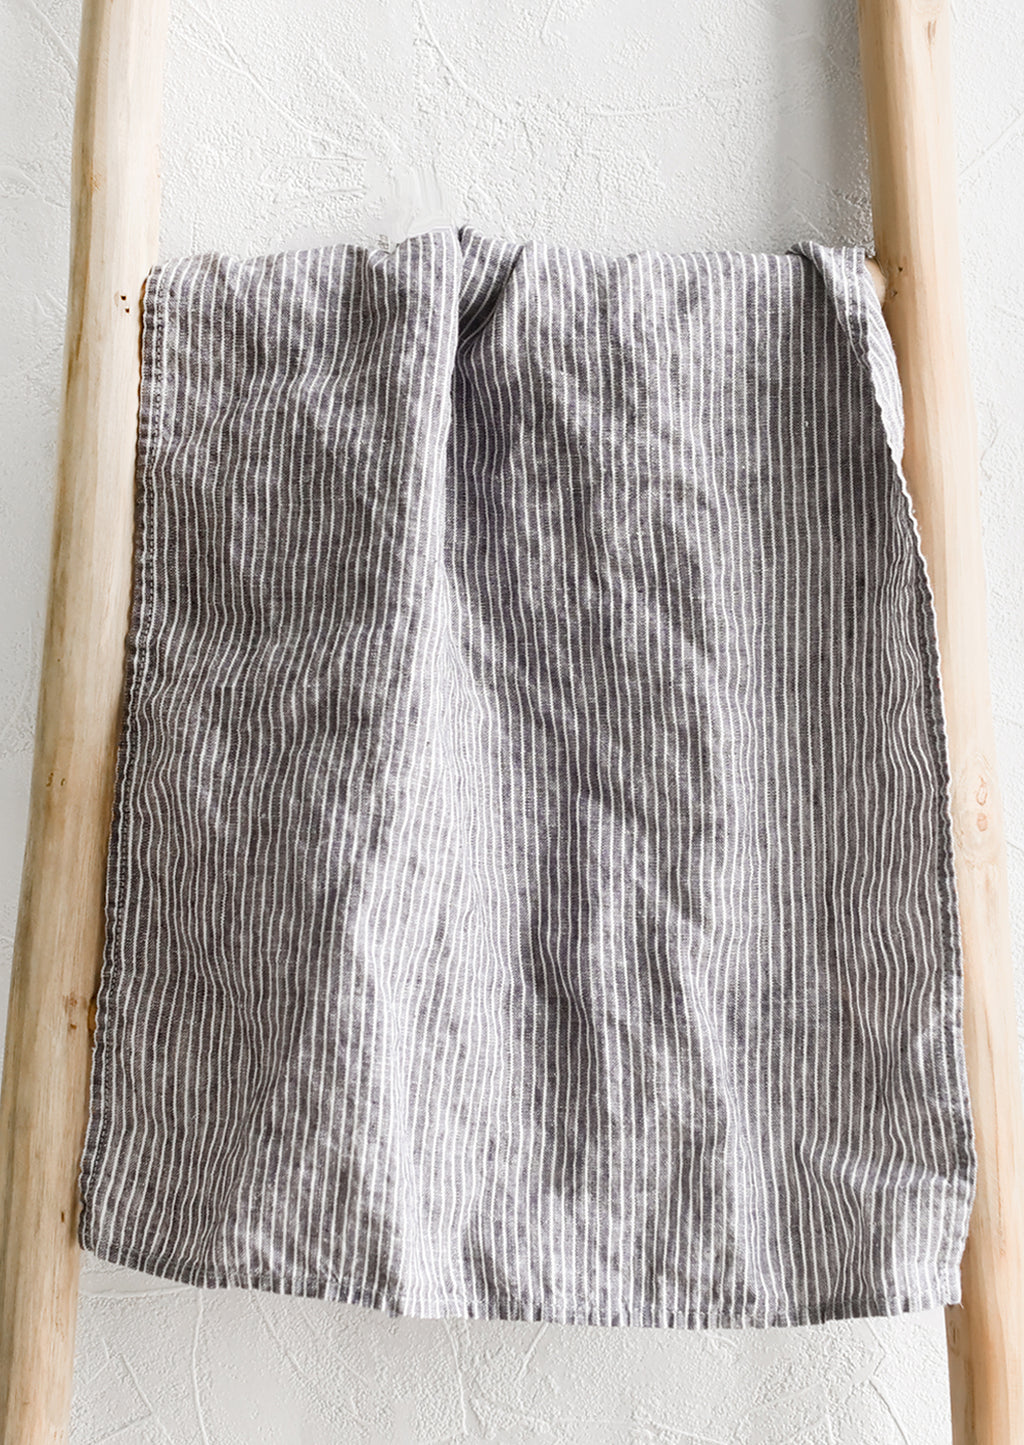 Chambray / White Stripe: A linen tea towel in grey and white pinstripe.